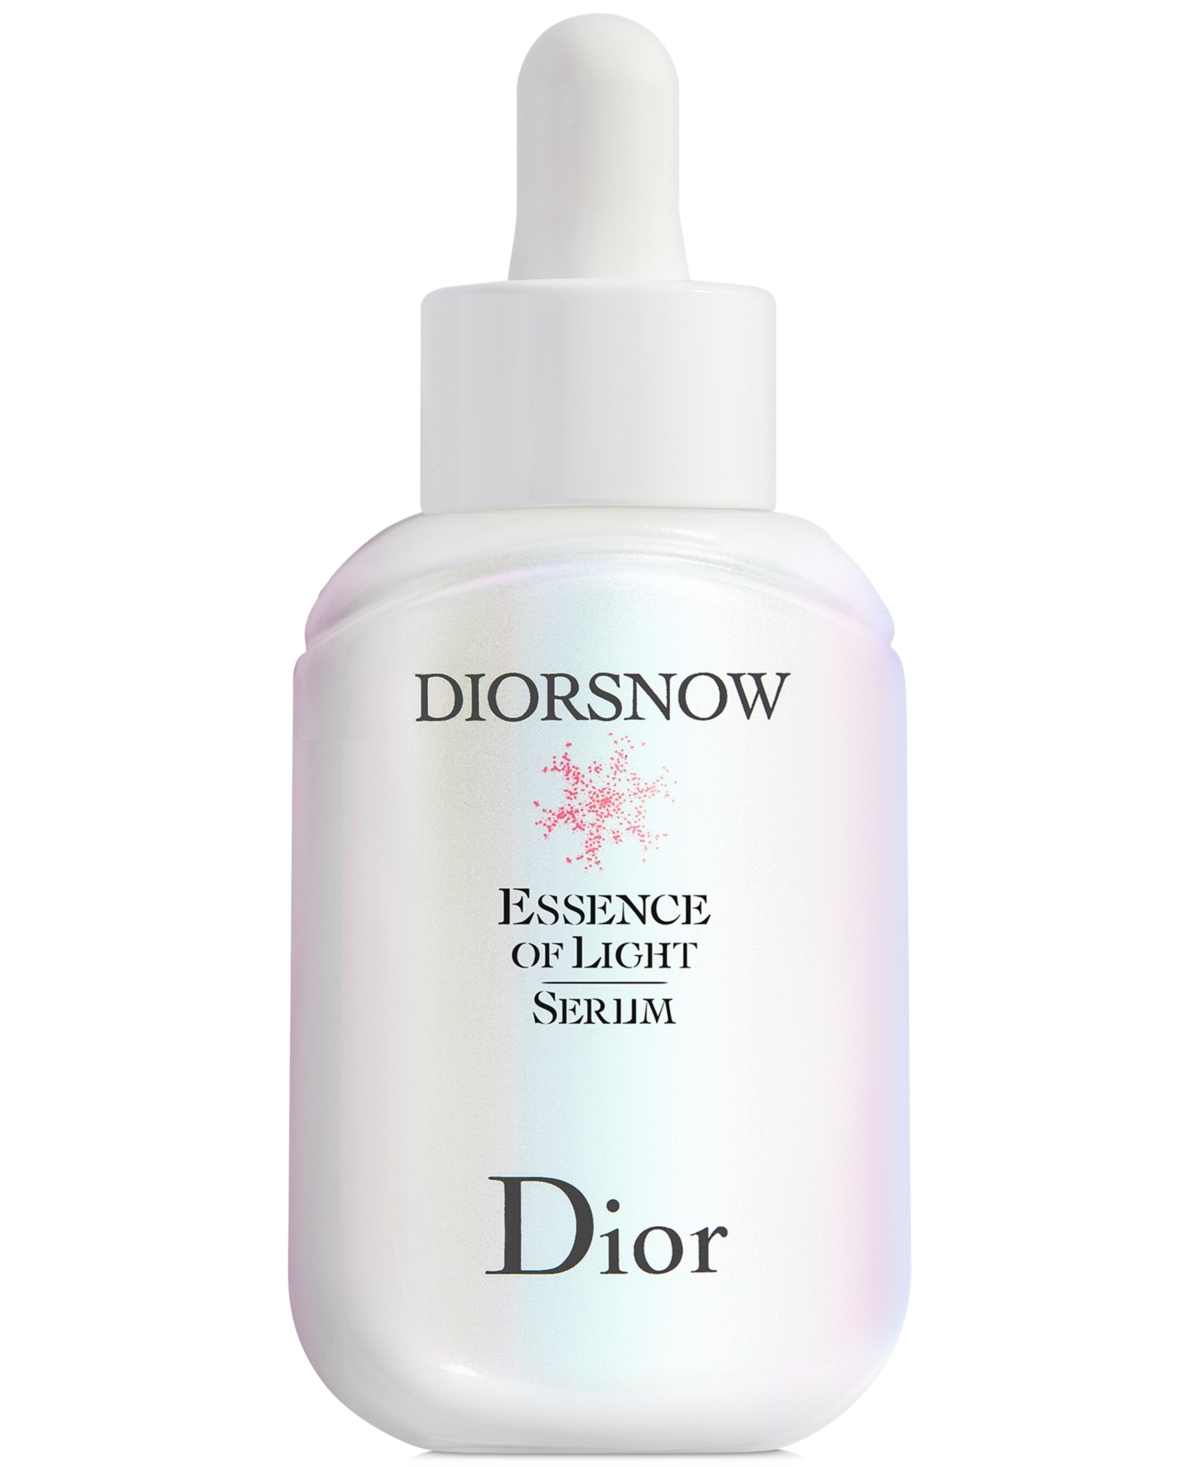 Dior Snow Essence Of Light Brightening Milk Serum, 1.7 oz In No Color